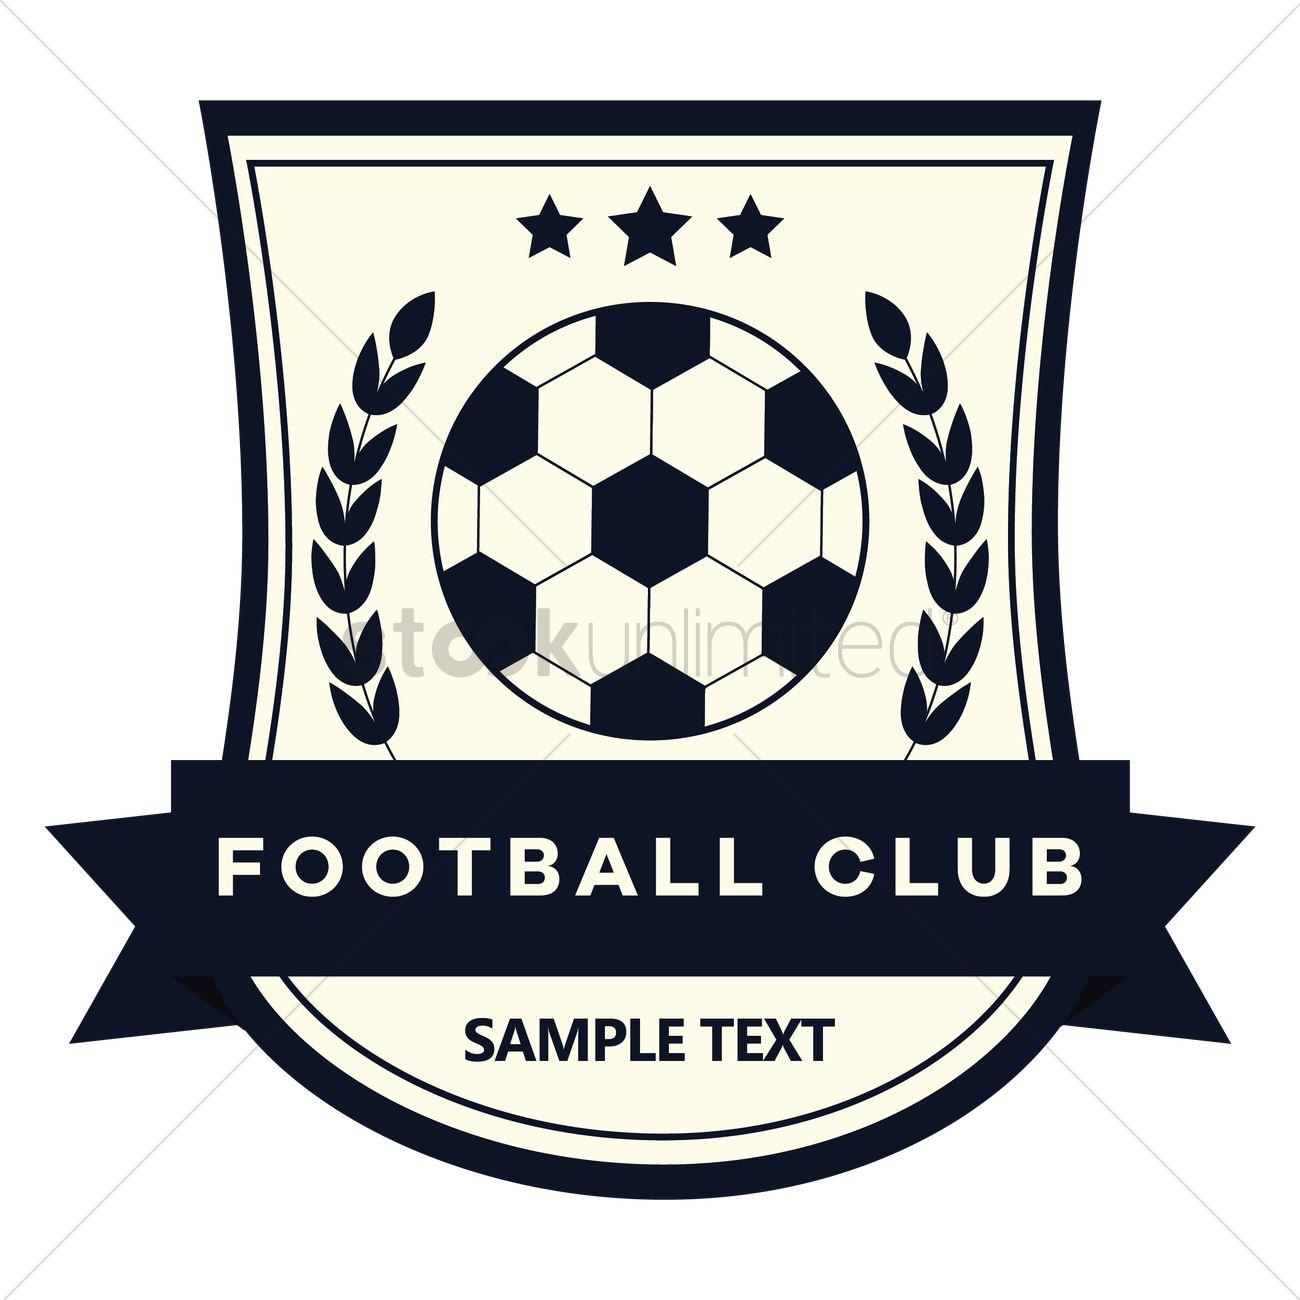 Football Club Logo - Football club logo Vector Image - 1527032 | StockUnlimited